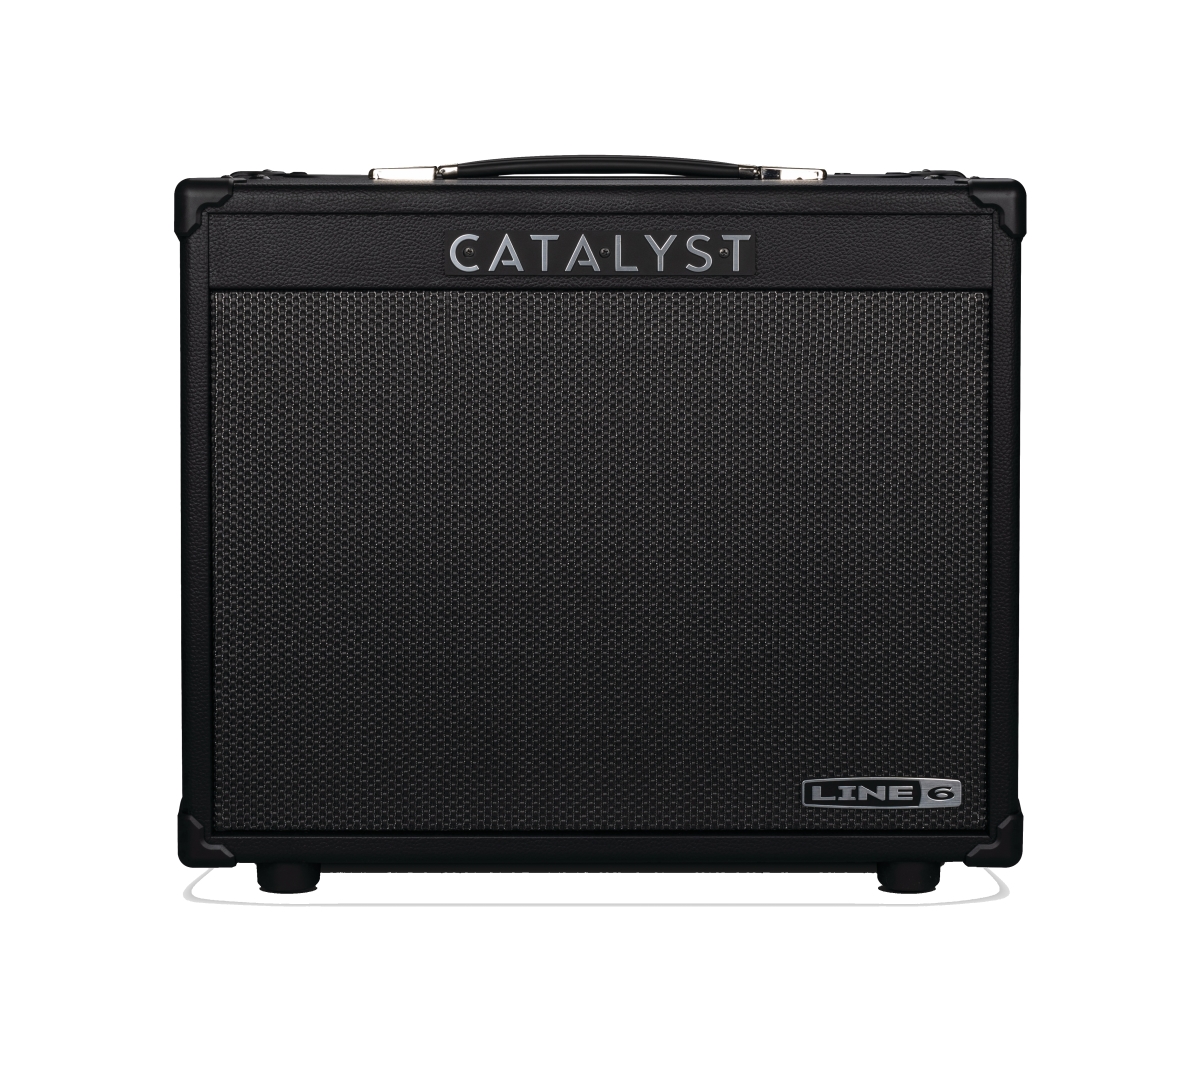 398625 Catalyst 60 Modeling Electric Guitar Amplifier, Black -  Line 6